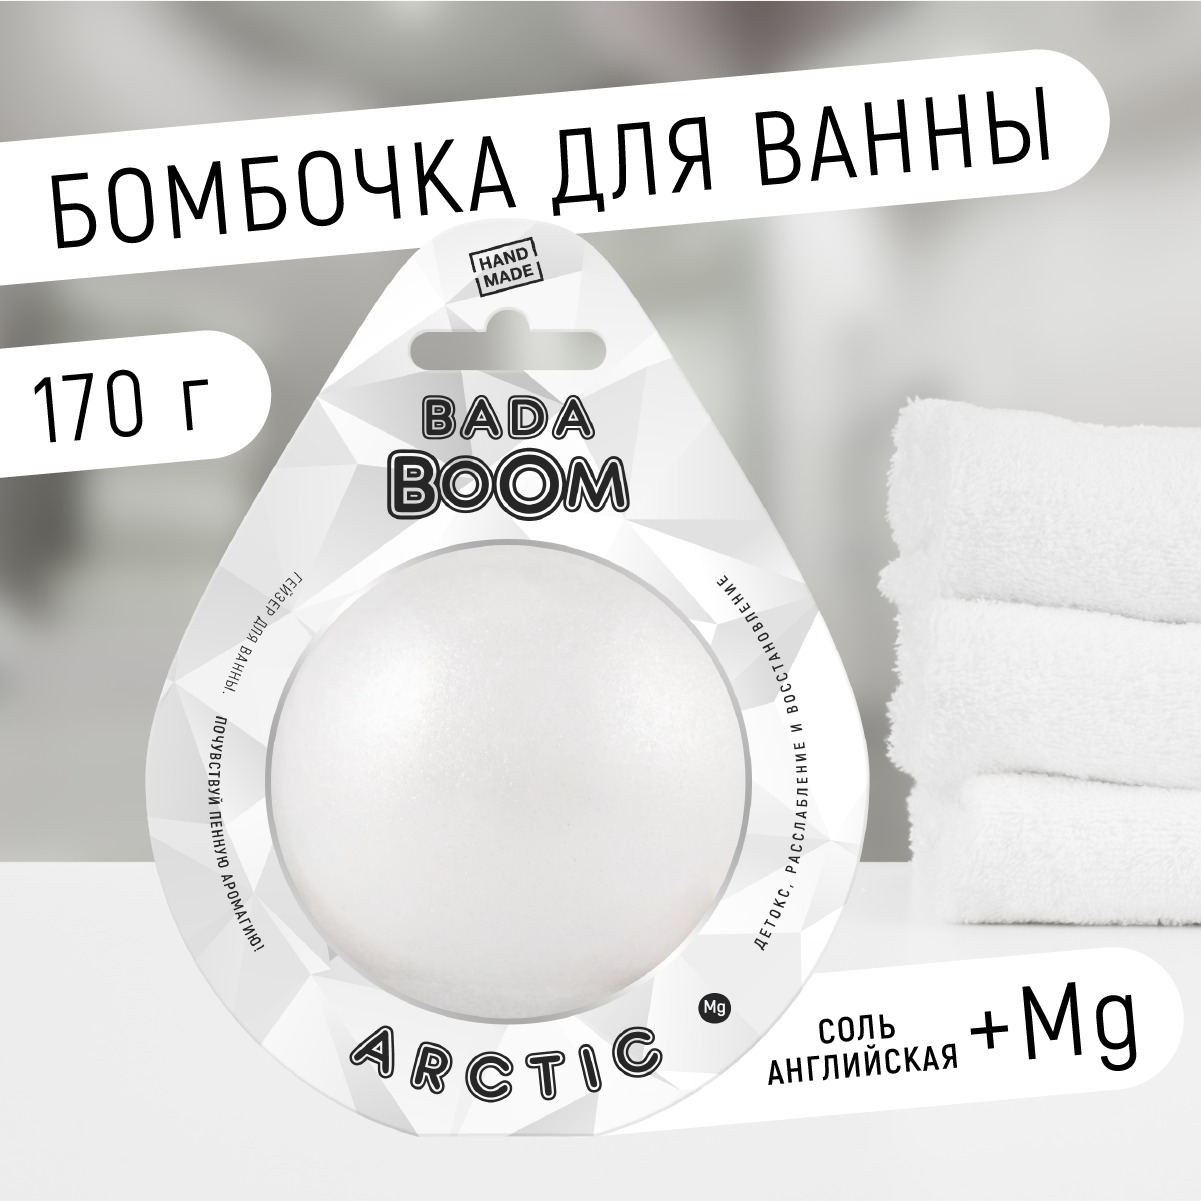 Бомбочка для ванны Arctic без запаха 170 г бомбочка для ванны bada boom bubble gum фруктовая жвачка 170 г